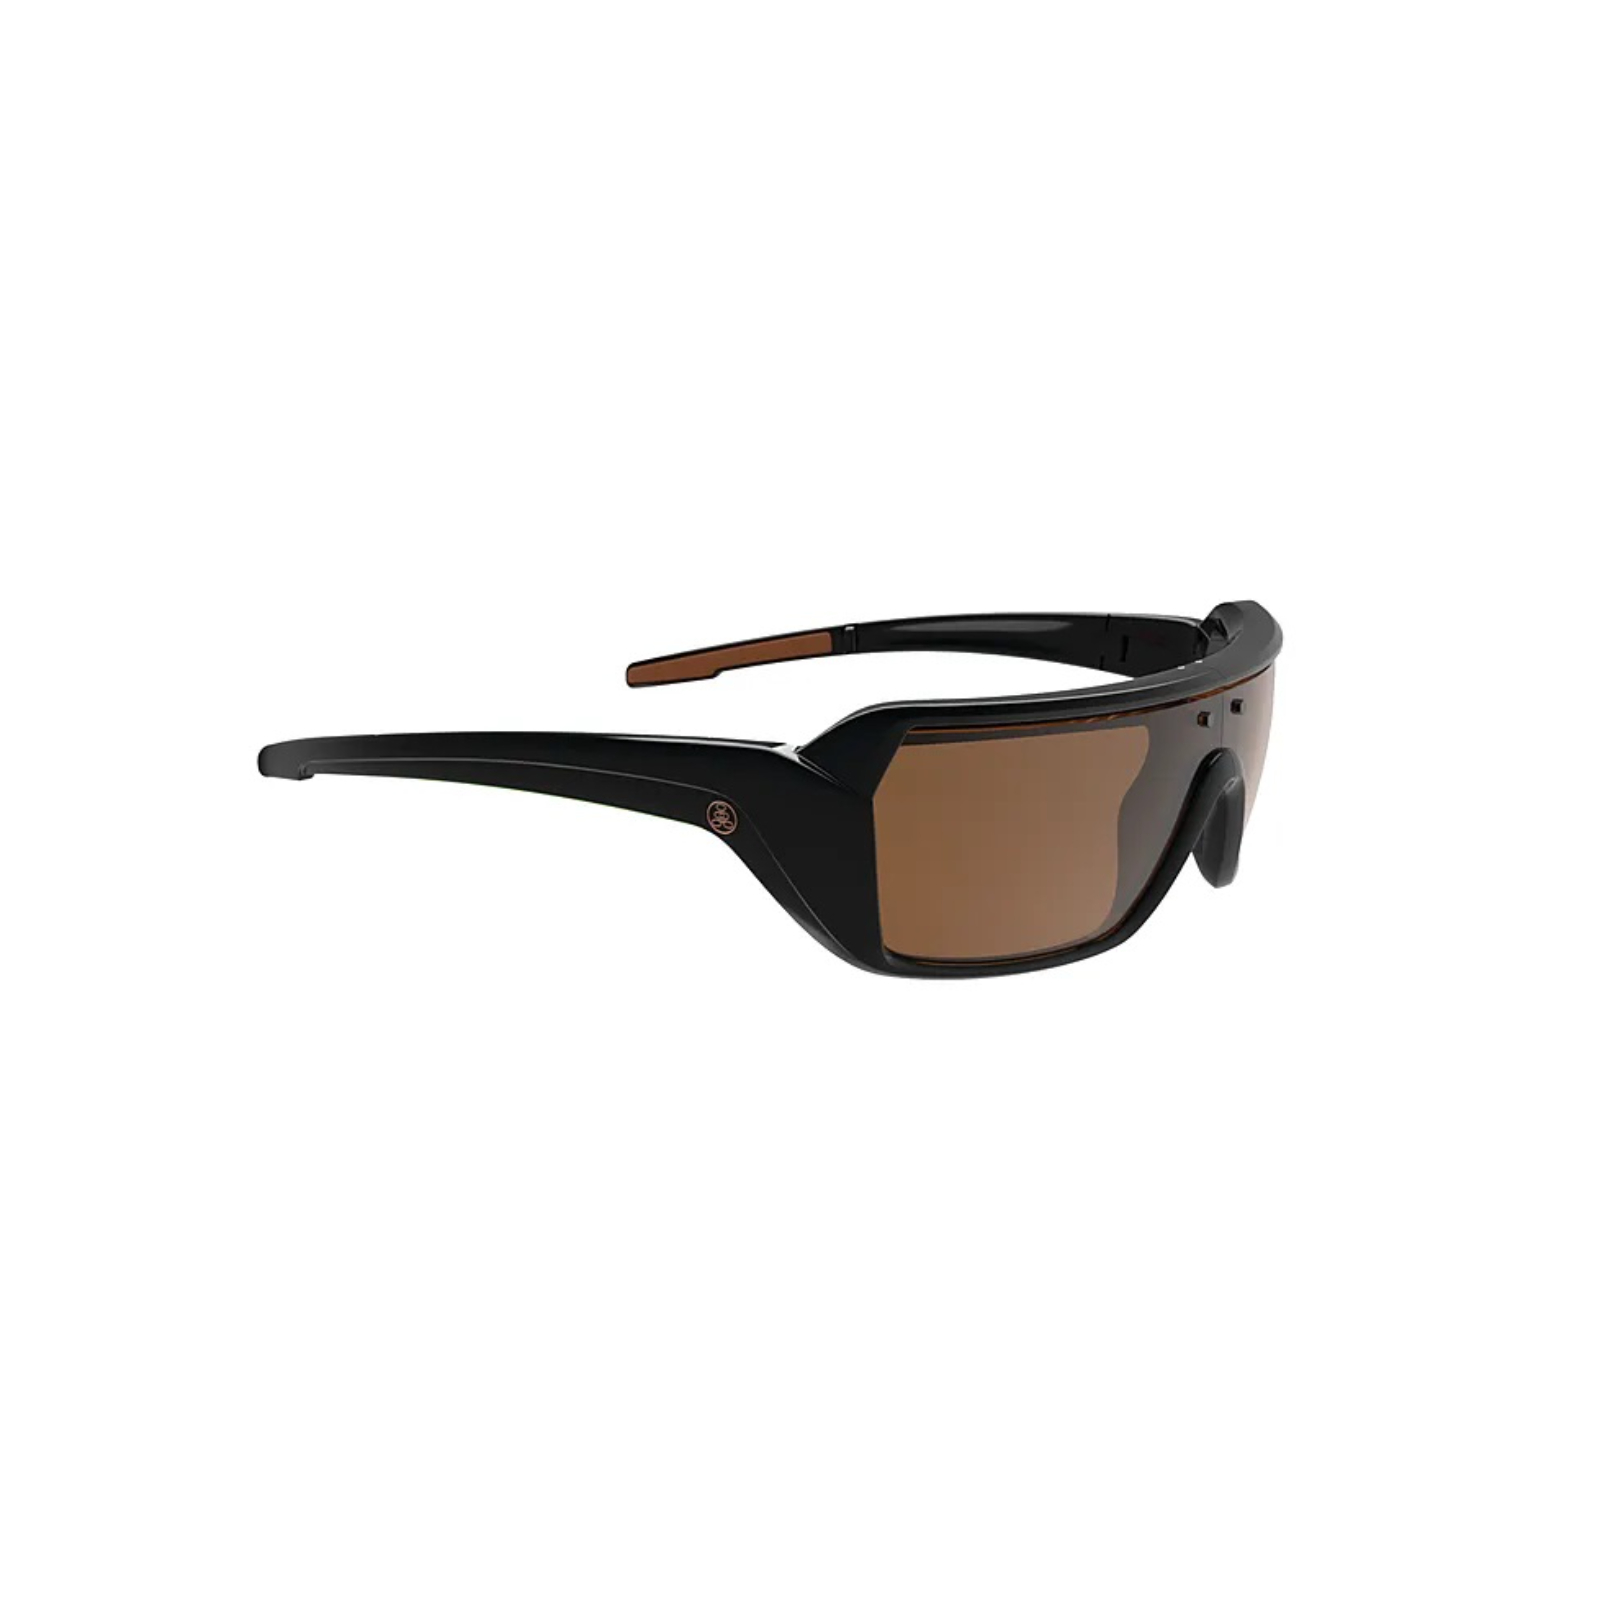 Poptical Popstorm Sunglasses Gloss Black / Brown Polarized